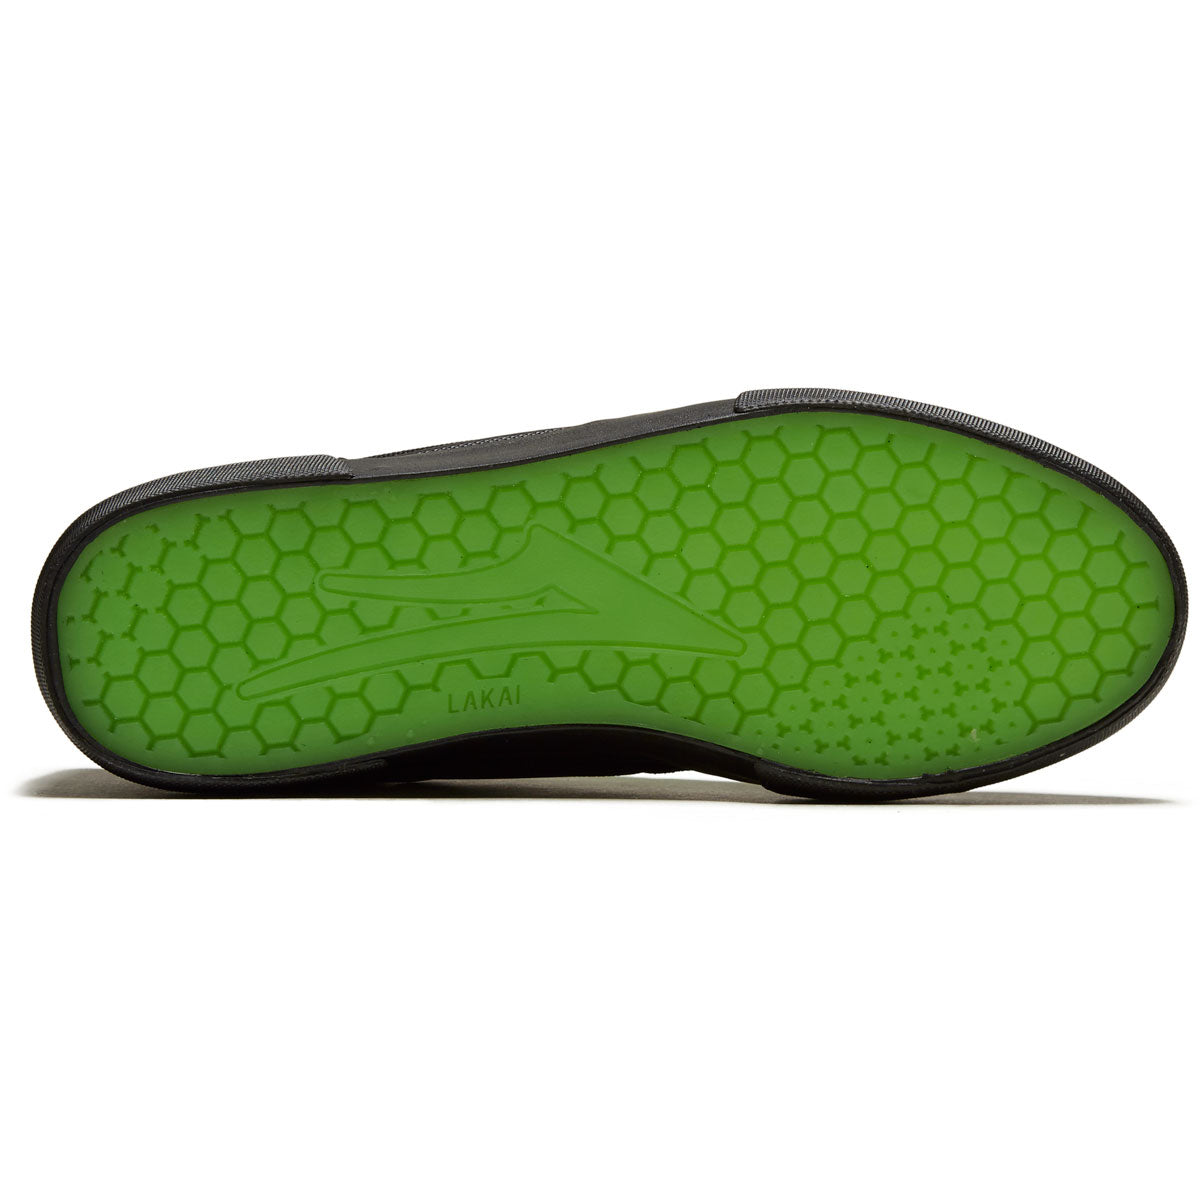 Lakai x Yeah Right Staple  Shoes - Black/UV Green Suede image 4